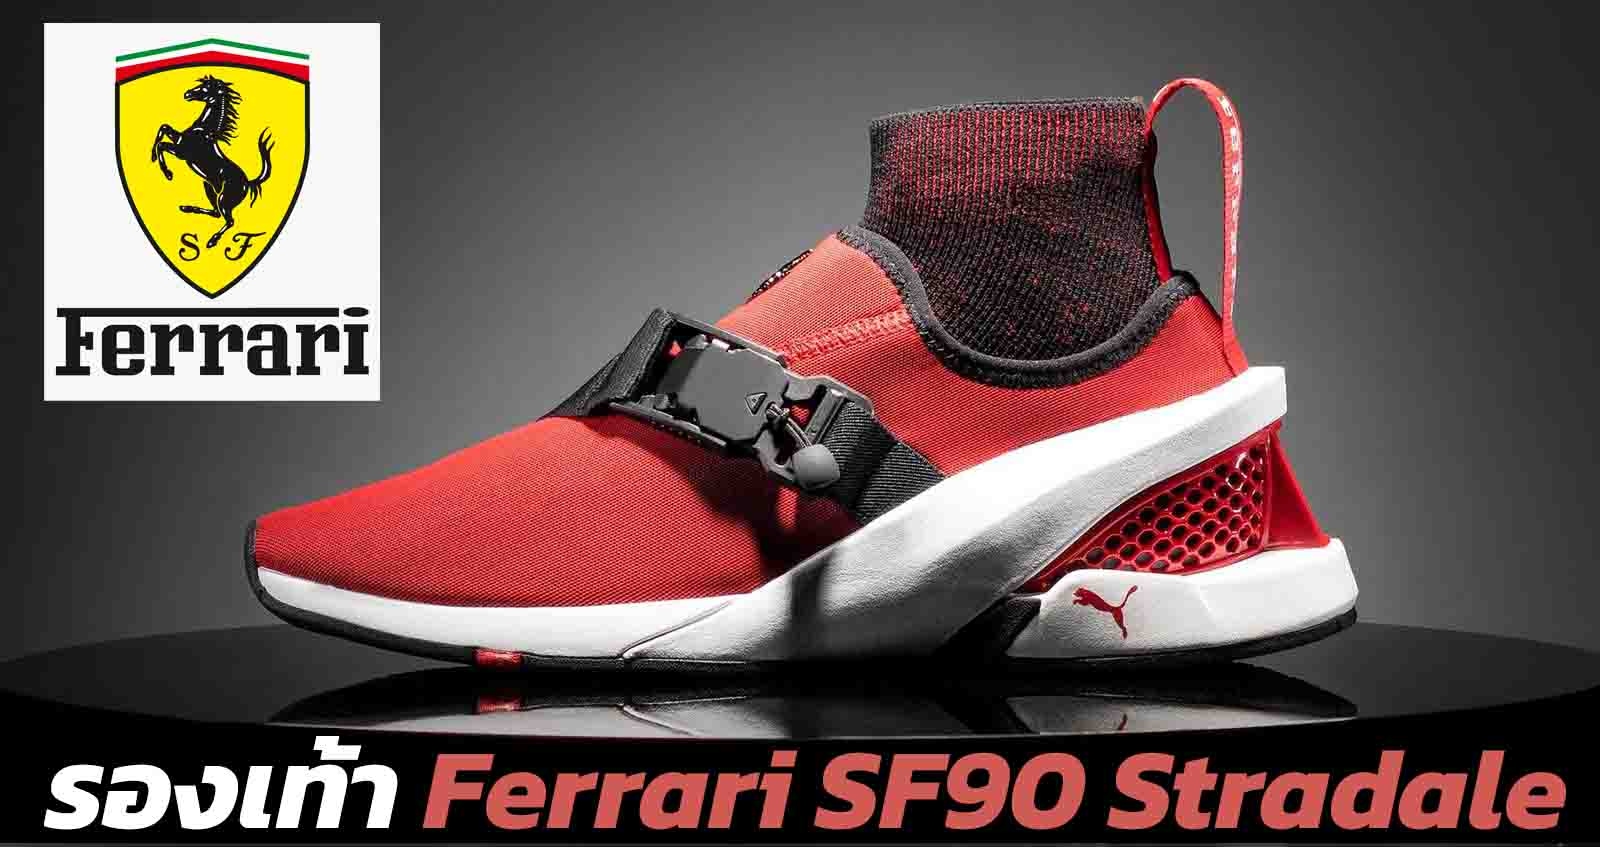 Puma เปิดตัวรองเท้าผ้าใบของ Ferrari SF90 Stradale ราคา 15,100 บาท